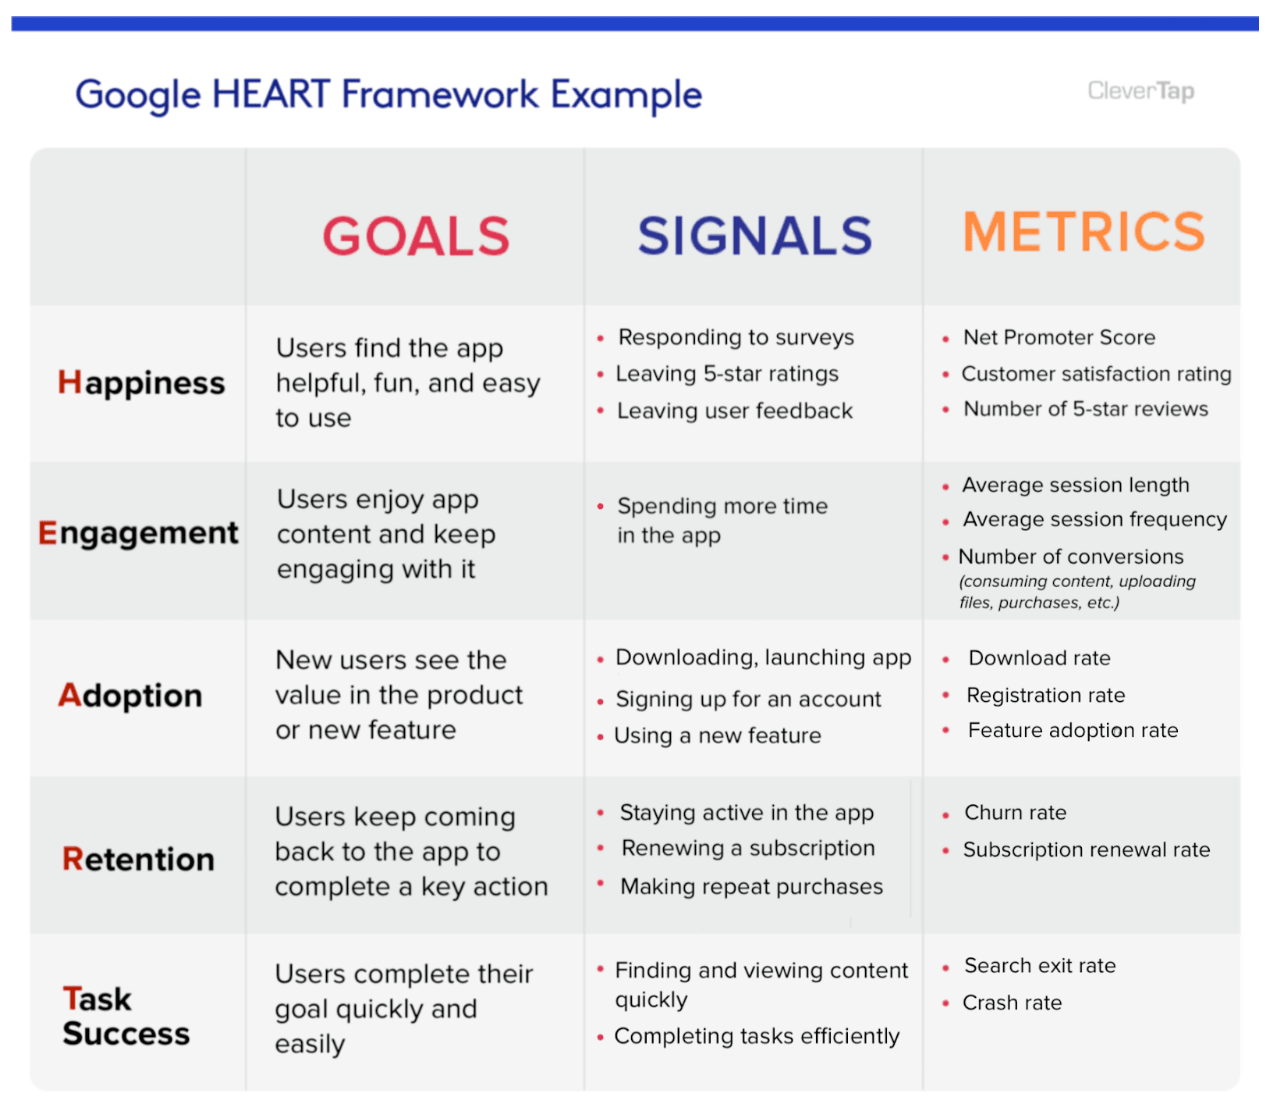 Google HEART Framework examples